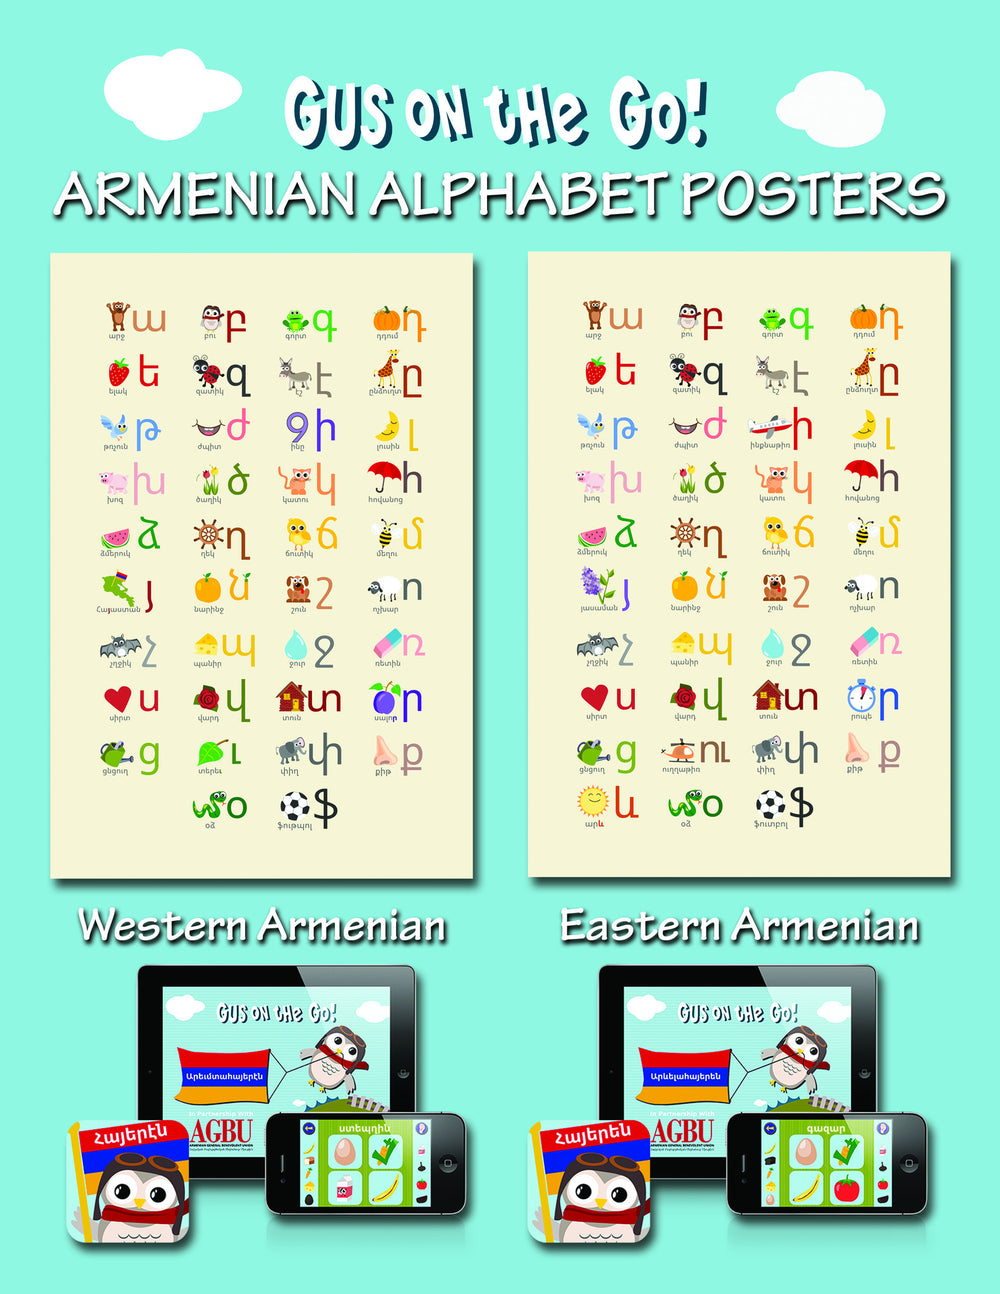 Armenian Alphabet Poster by Gus on the Go